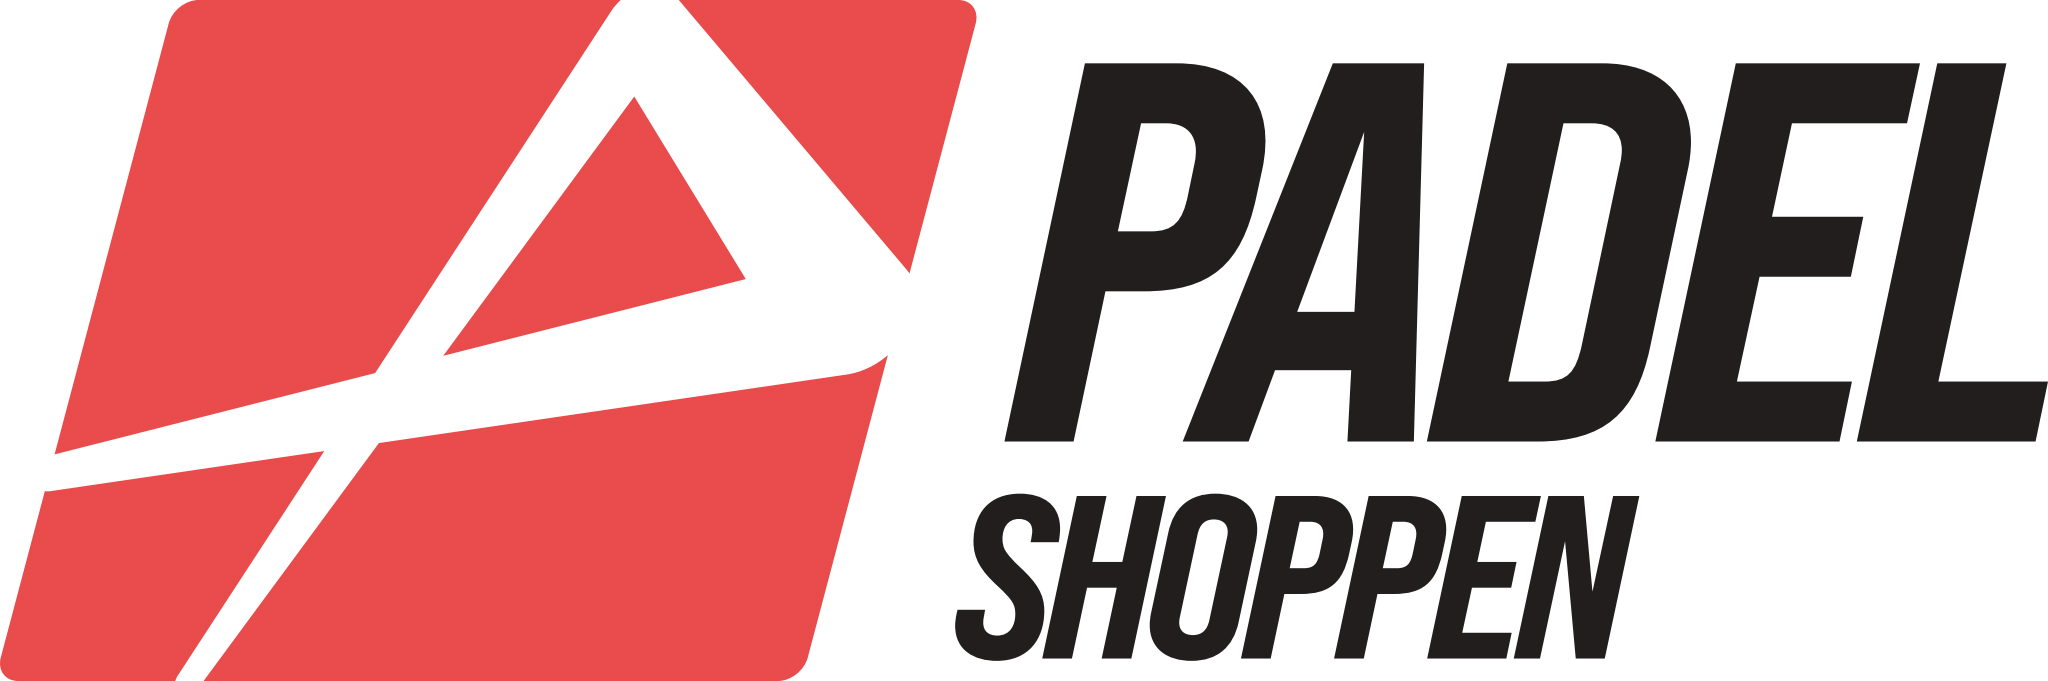 Padelshoppen_logo.png